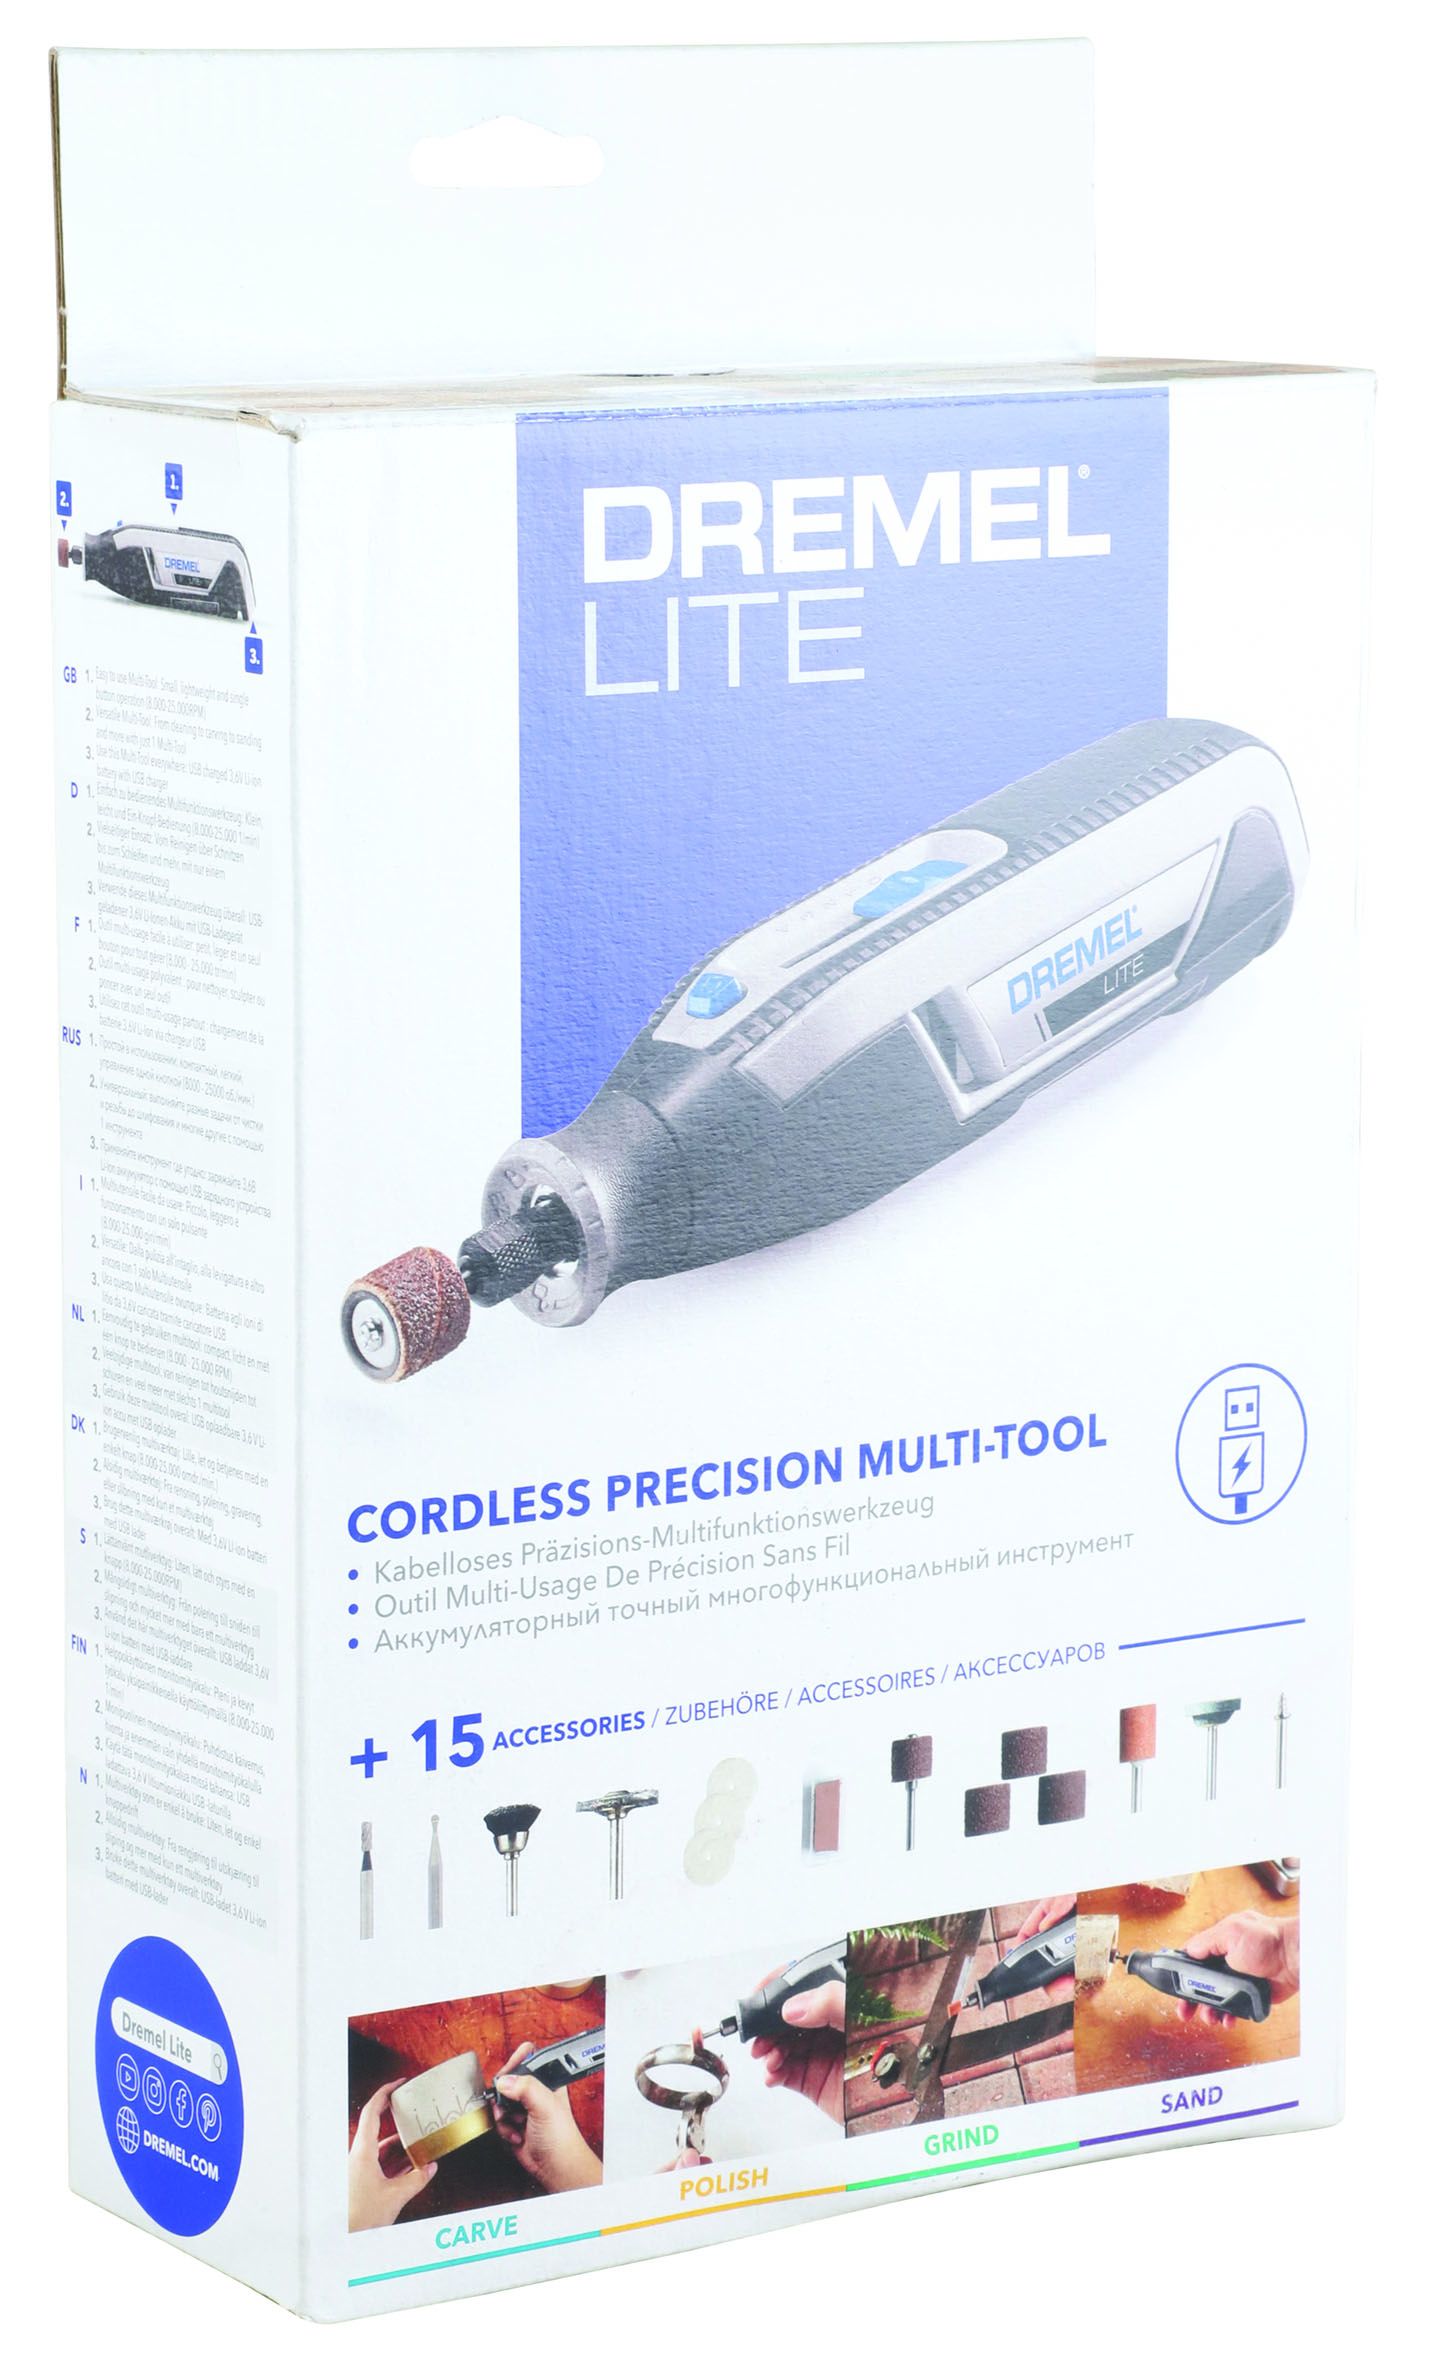 DREMEL 7760-15 Lite cordless multi-tool + 15 accessories - DREMEL